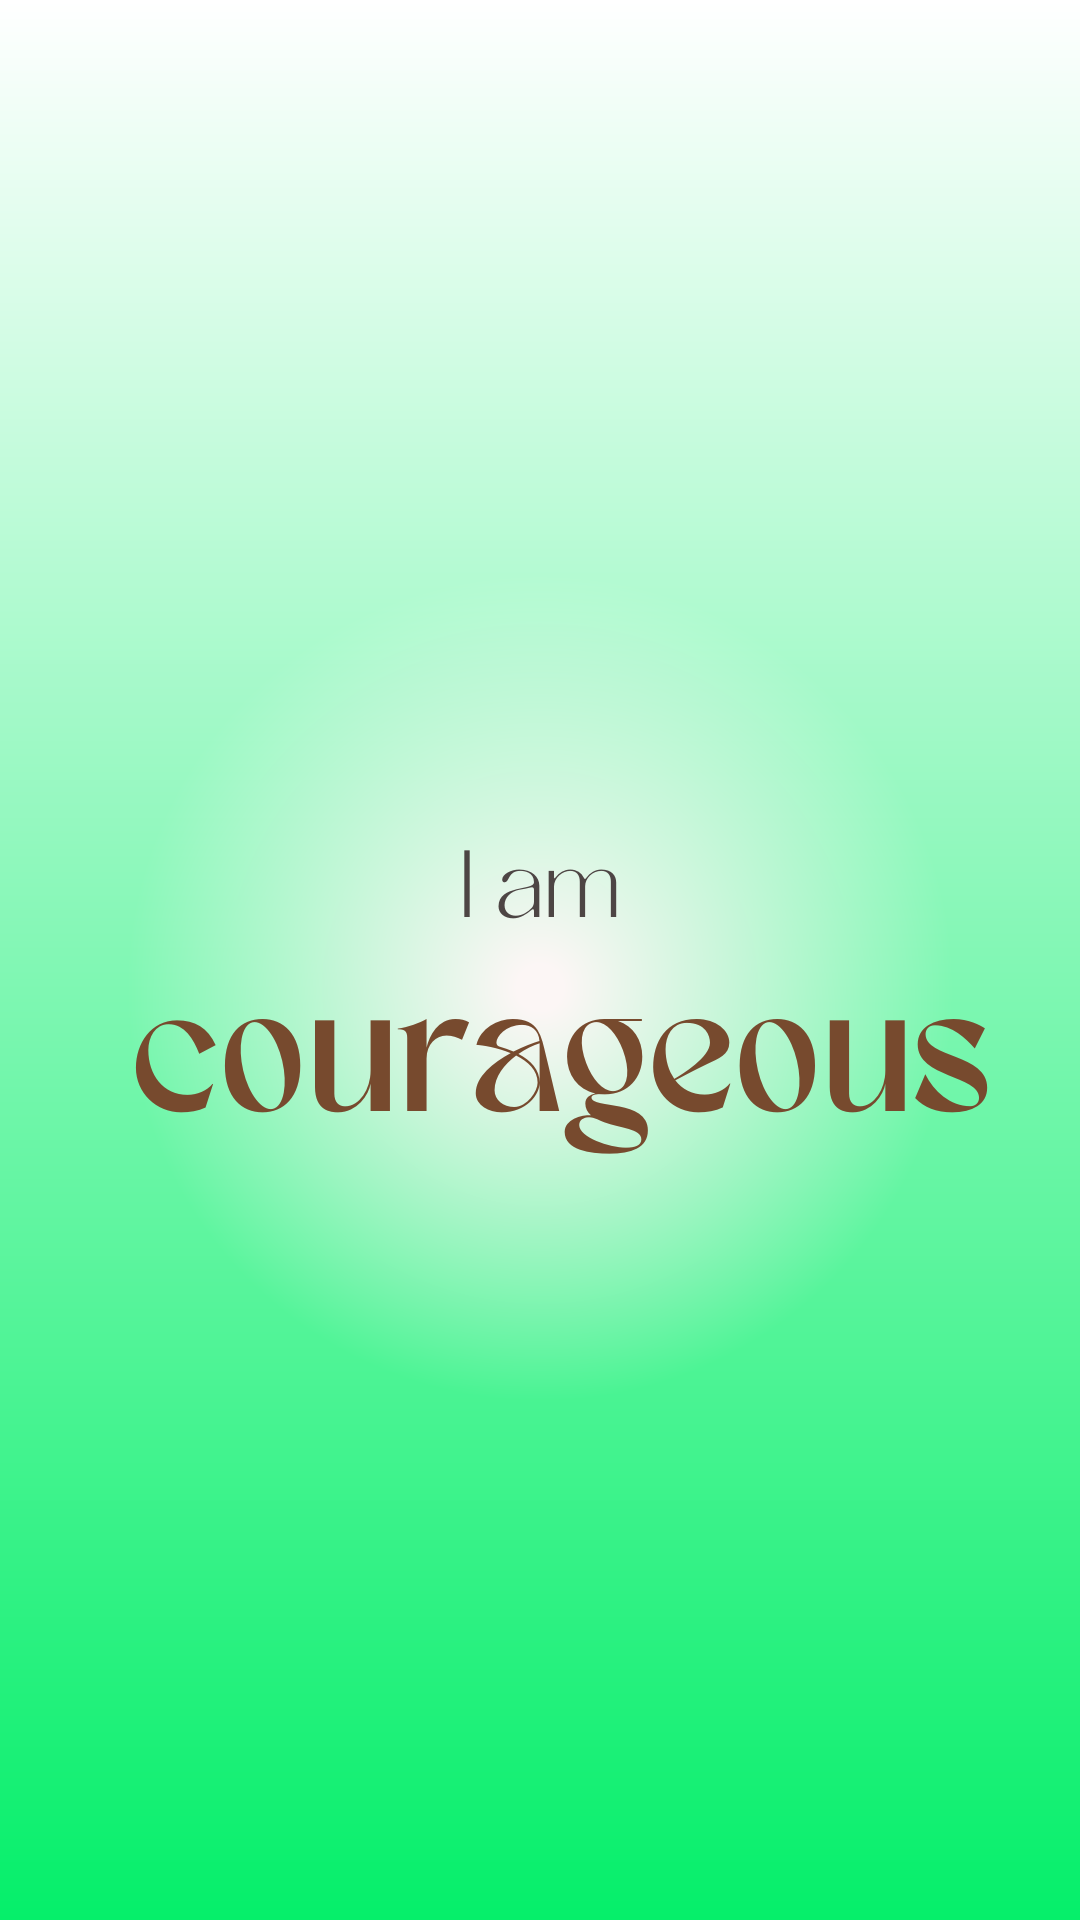 i am courageous positive affirmation